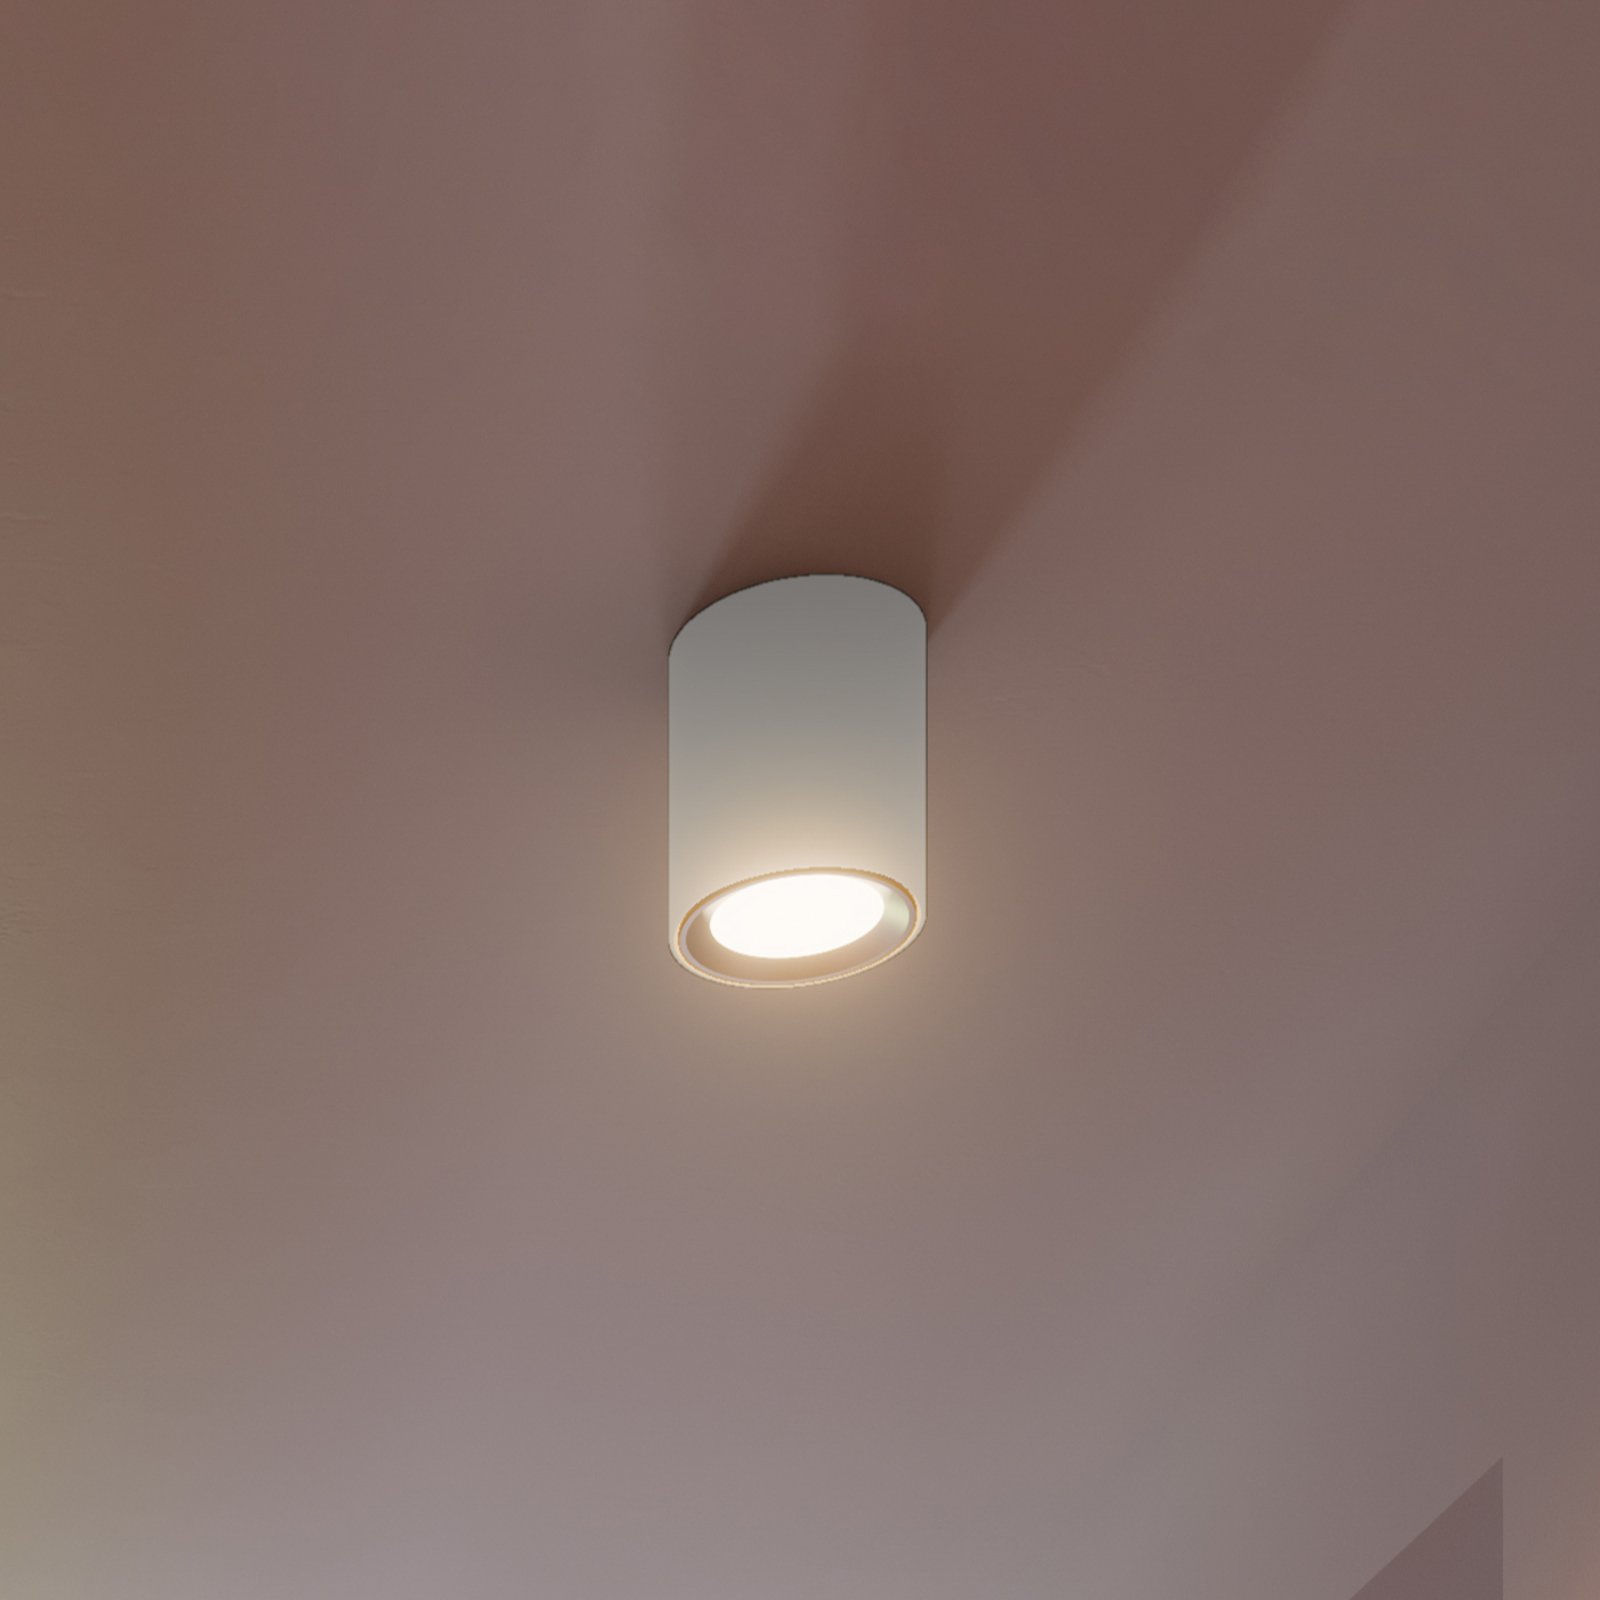 LED-takspotlight Landon Smart, vit, höjd 14 cm